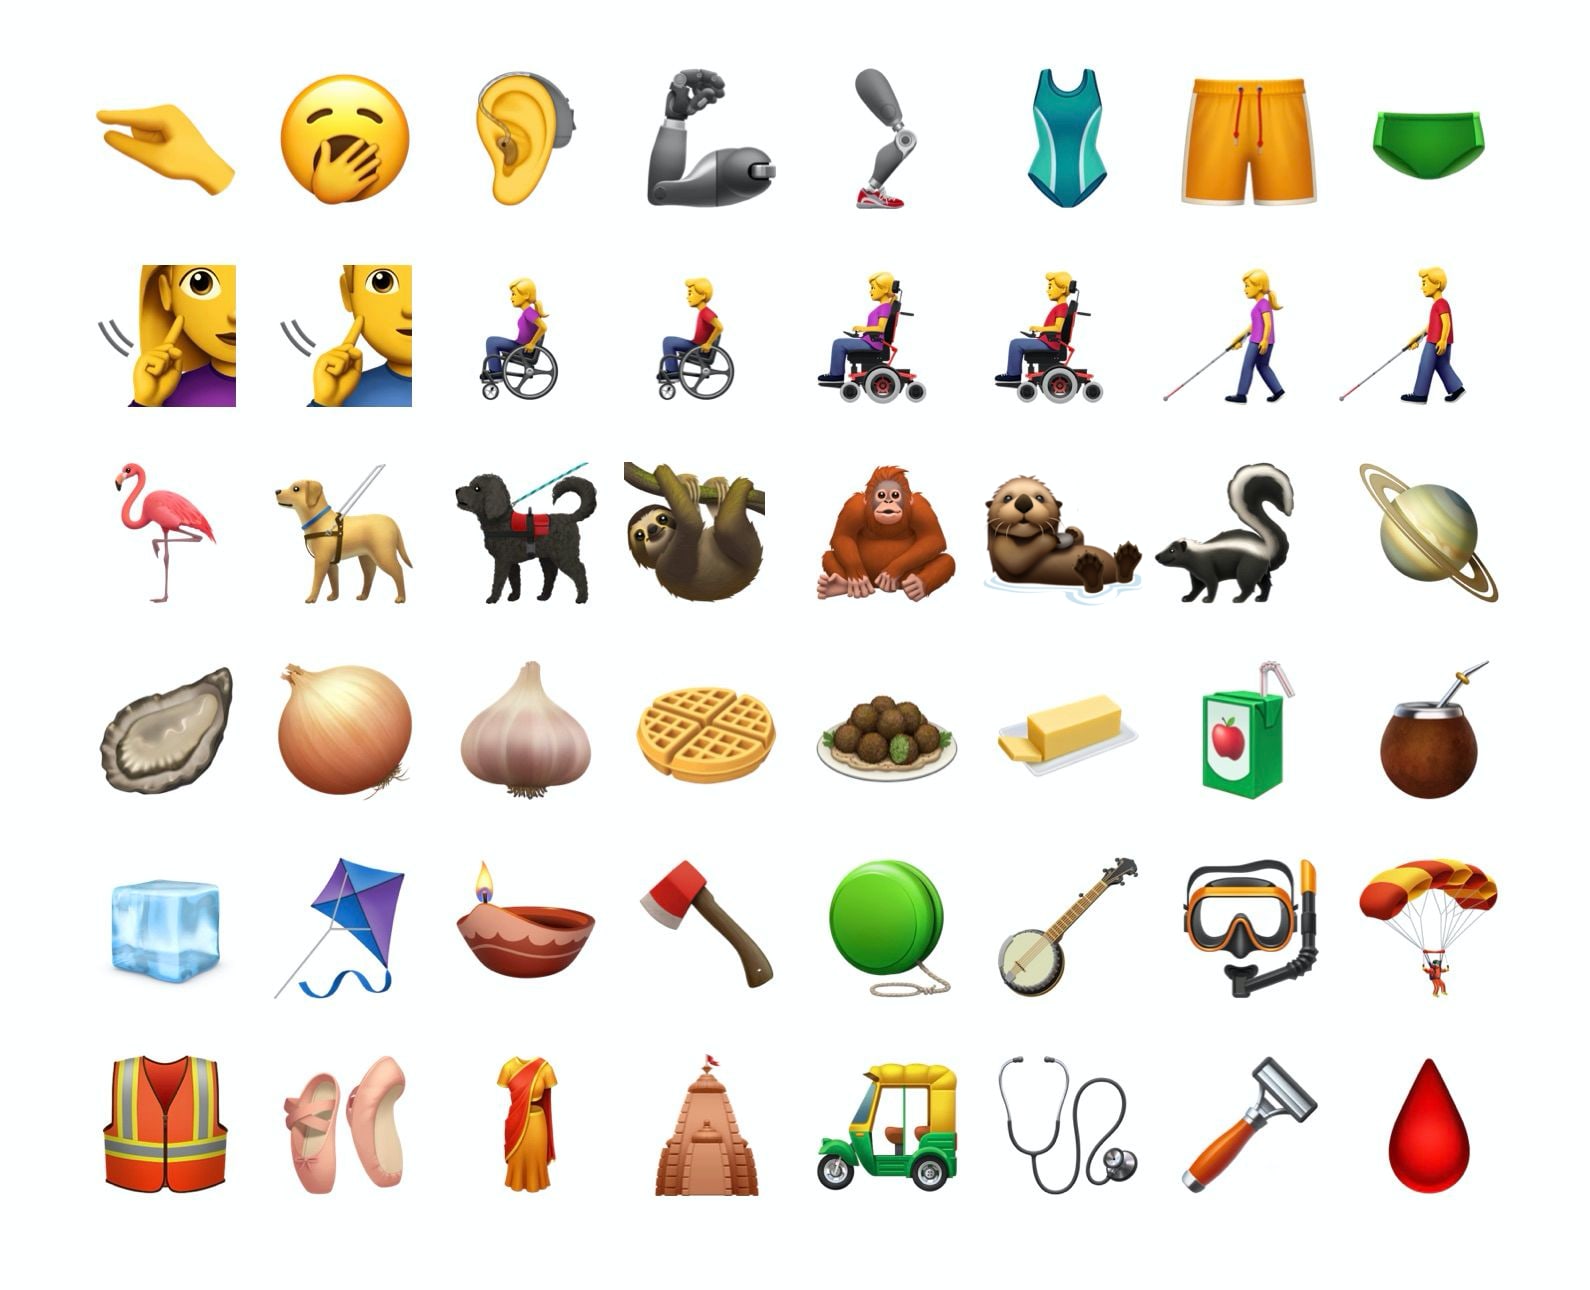 new ios 10.2 emojis